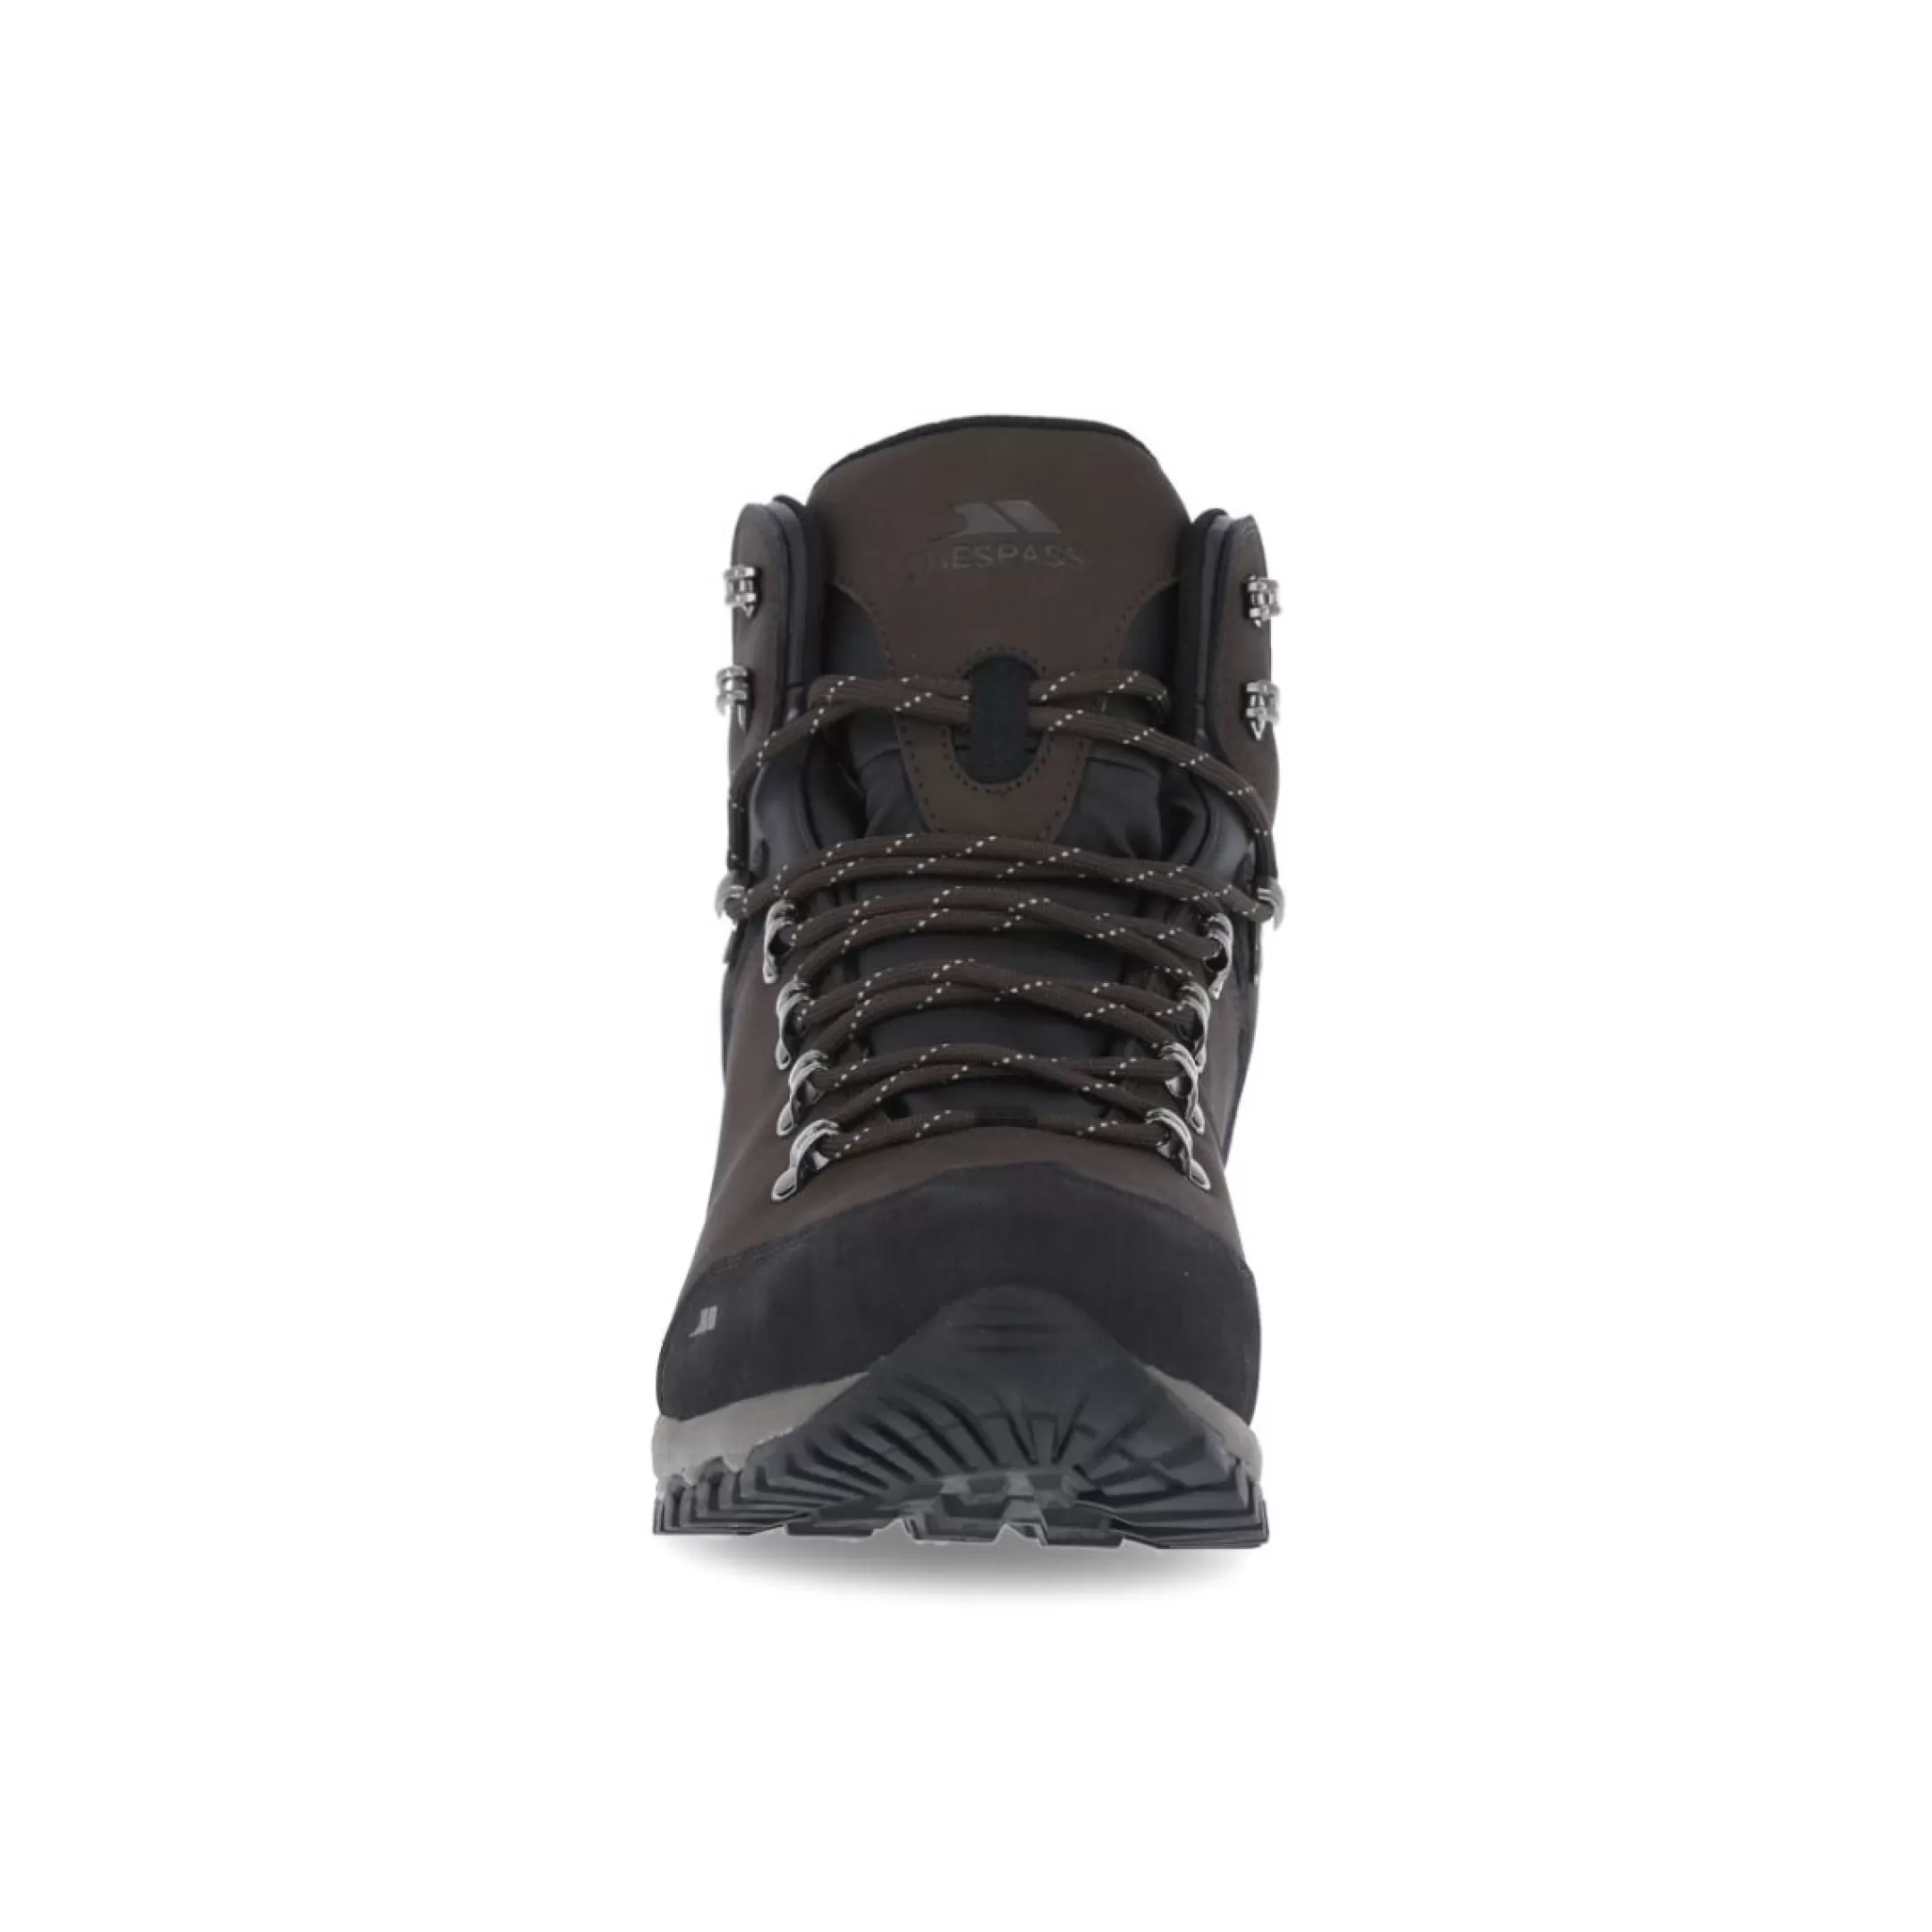 Men's Waterproof Vibram Walking Boots Gerrard | Trespass Store